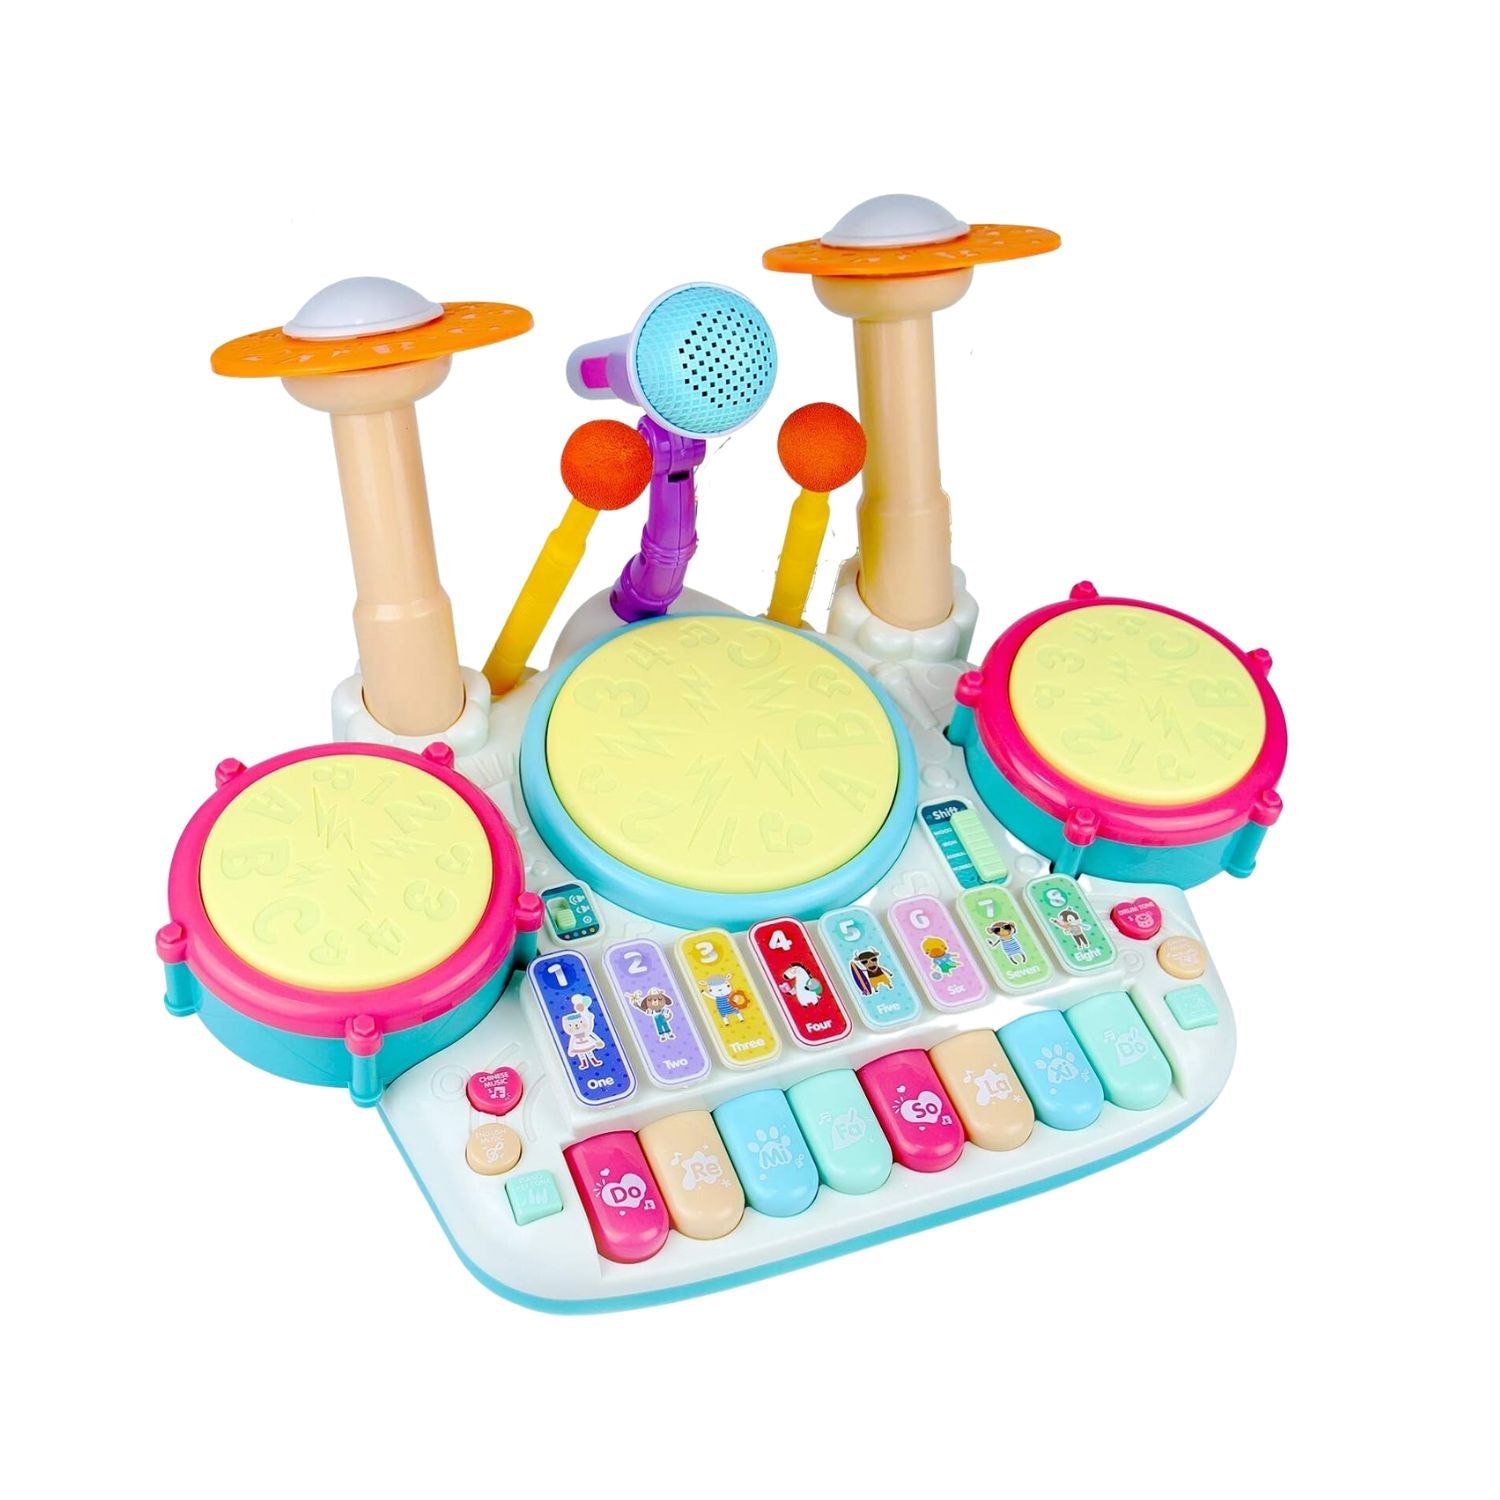 Gominimo Kids Toy Educational Drum Set